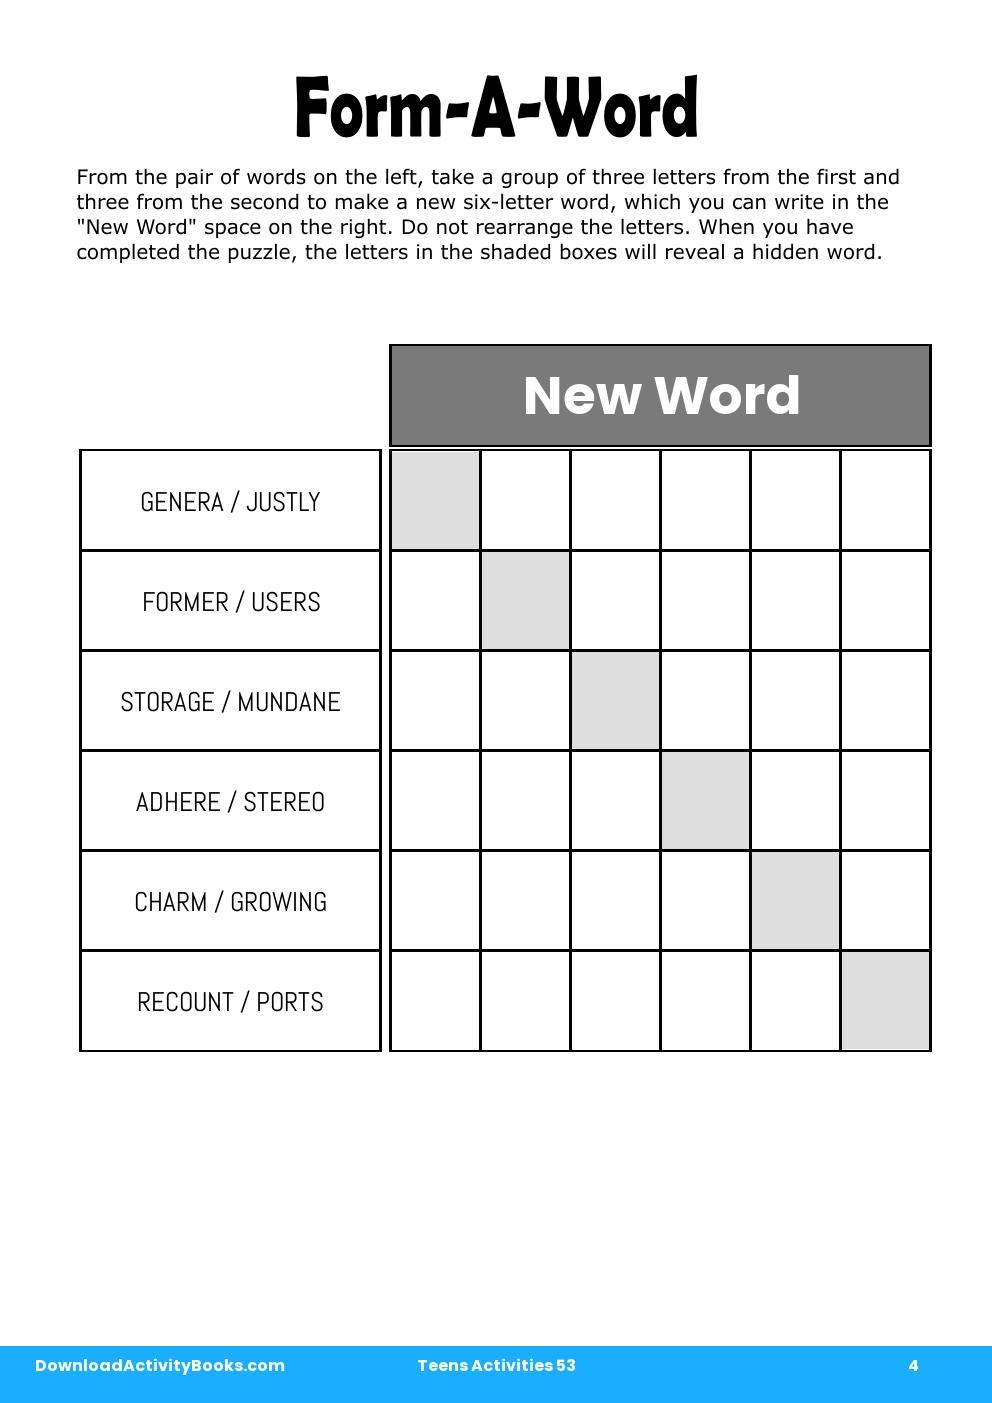 Form-A-Word in Teens Activities 53